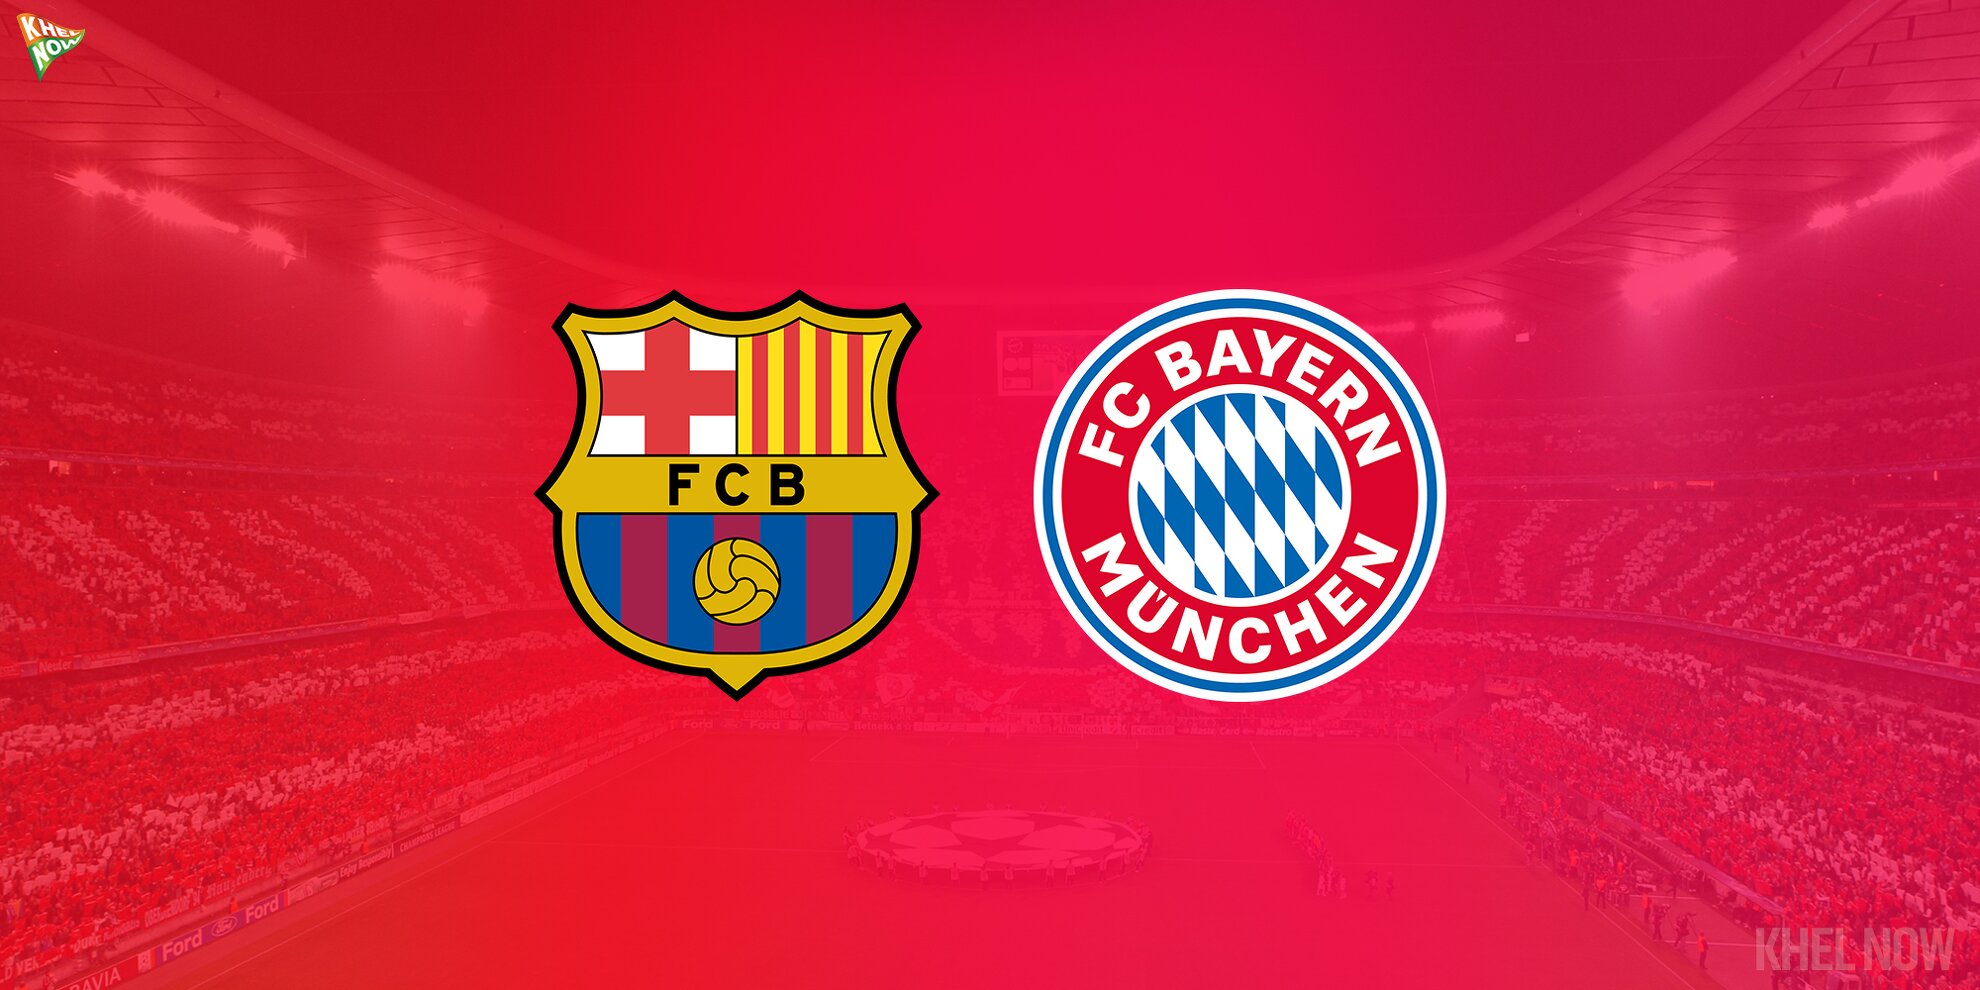 UEFA Champions League 2022-23: FC Barcelona vs Bayern Munich Live Commentary